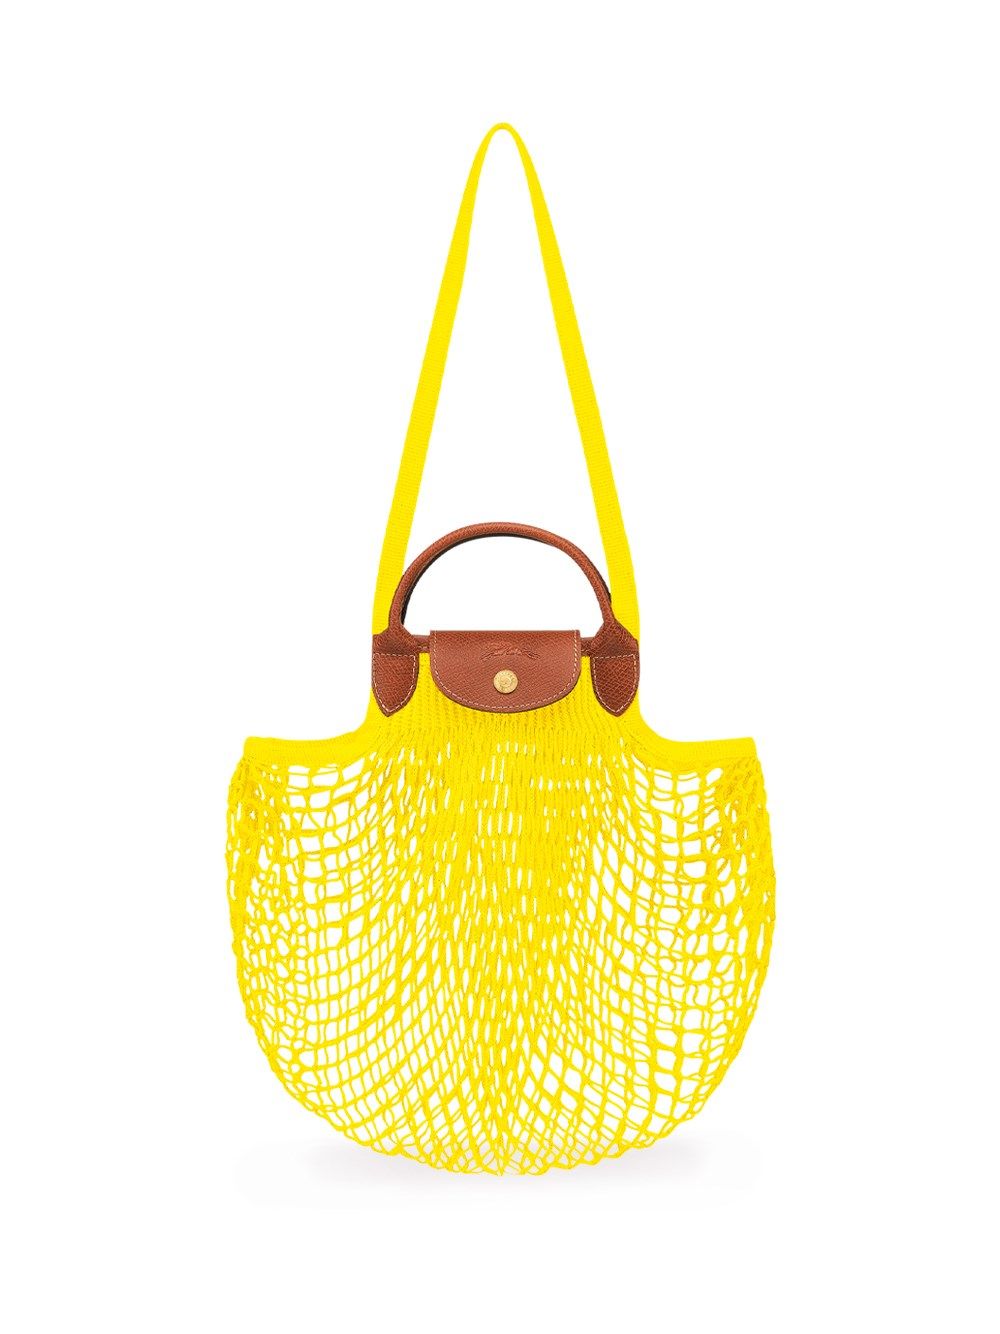 longchamp `le pliage filet` net top handle bag available on Spinnaker - 24805 | Spinnaker Boutique